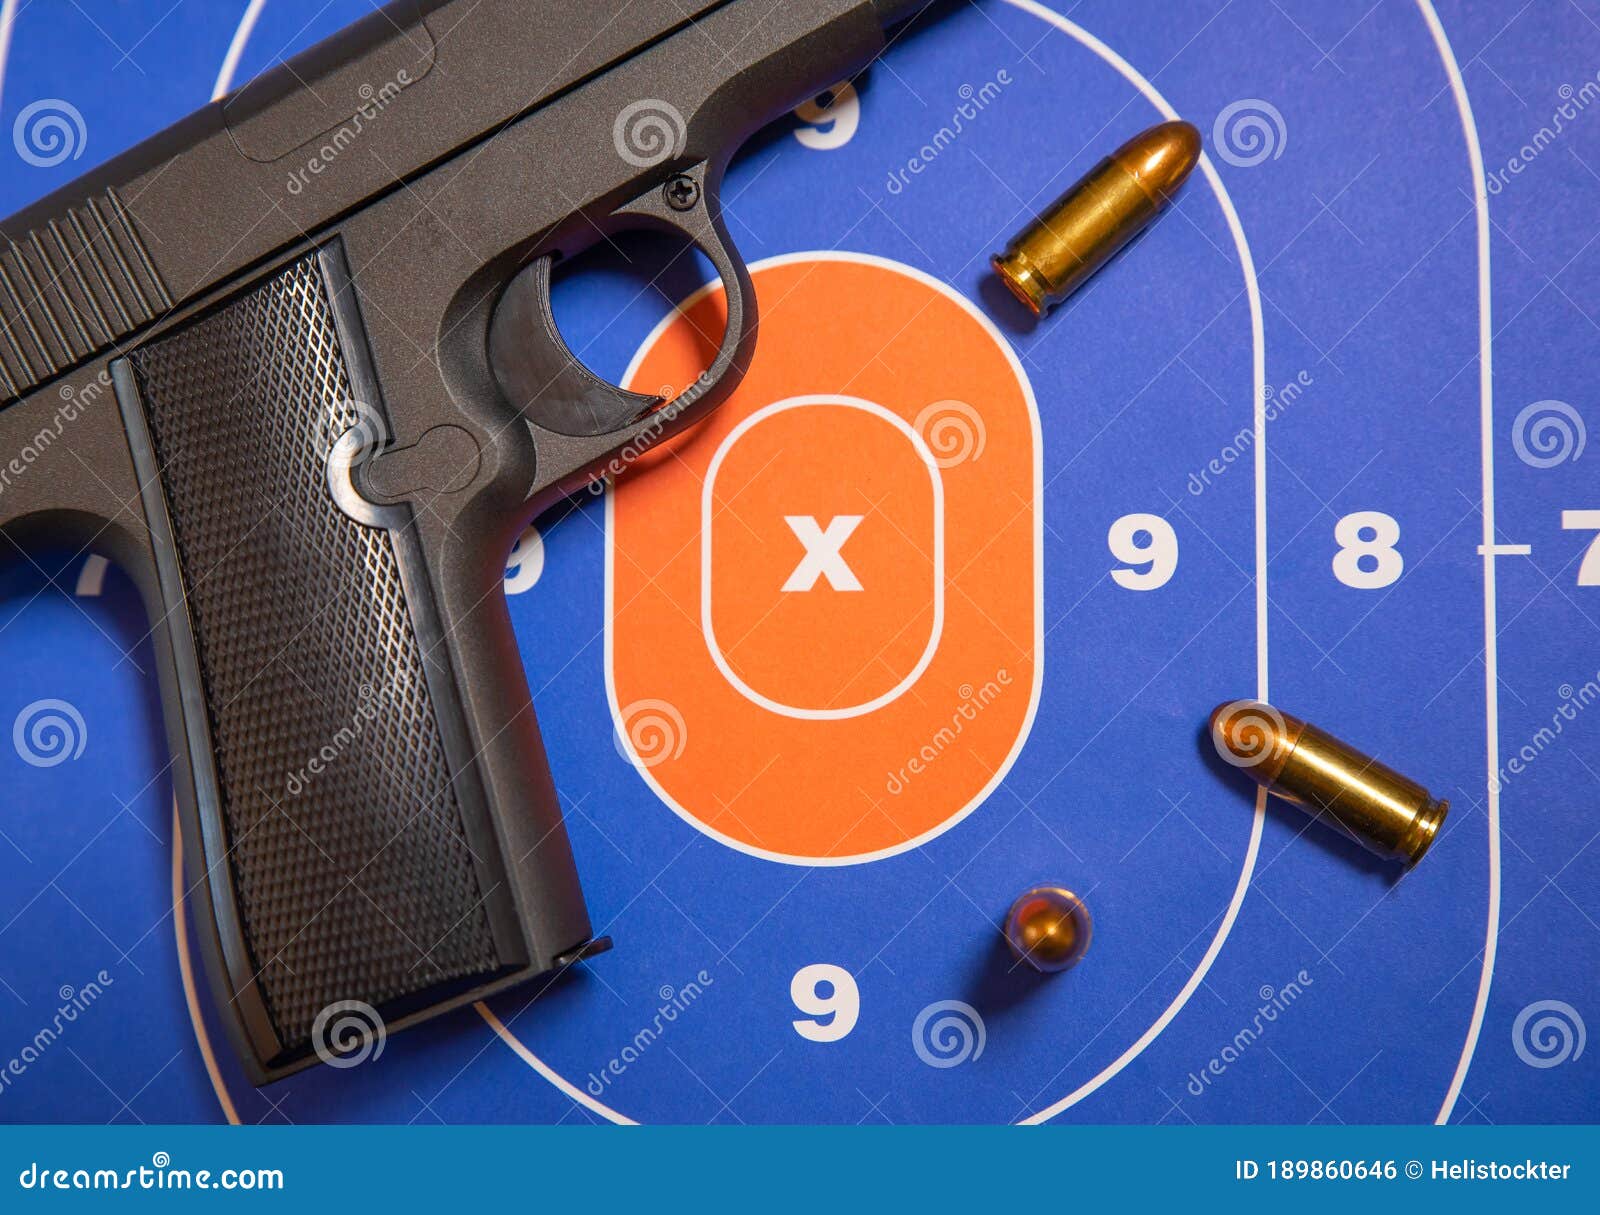 Circular Metal Pistol Gun Practice Silhouette Small Hunting Shooting Aim Target